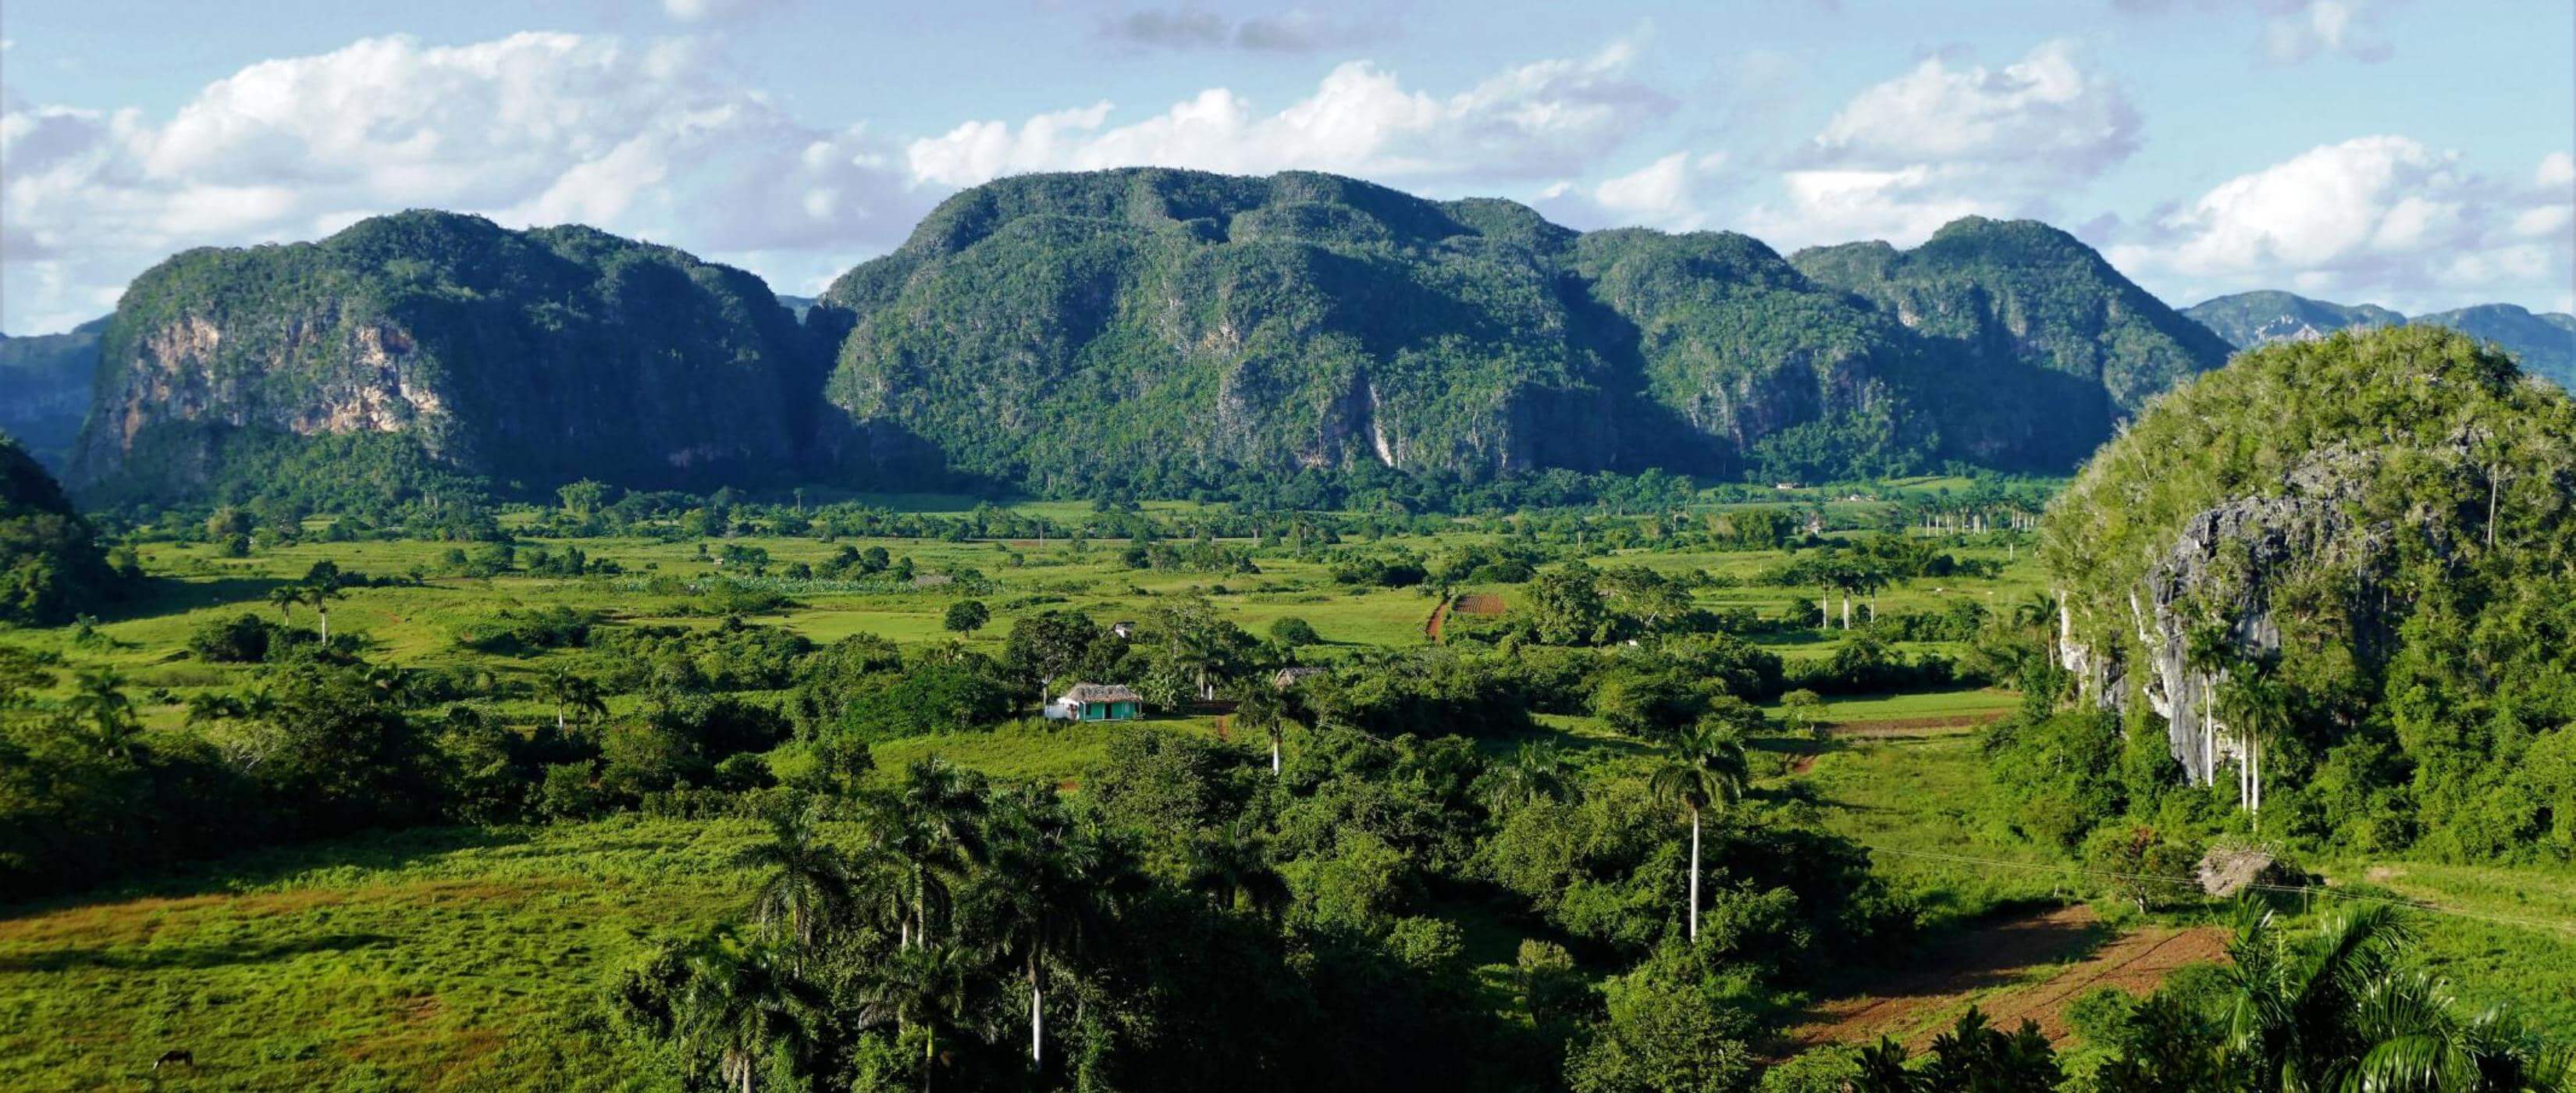 Foto: Das Vinales-Tal auf Kuba - Lupe Reisen